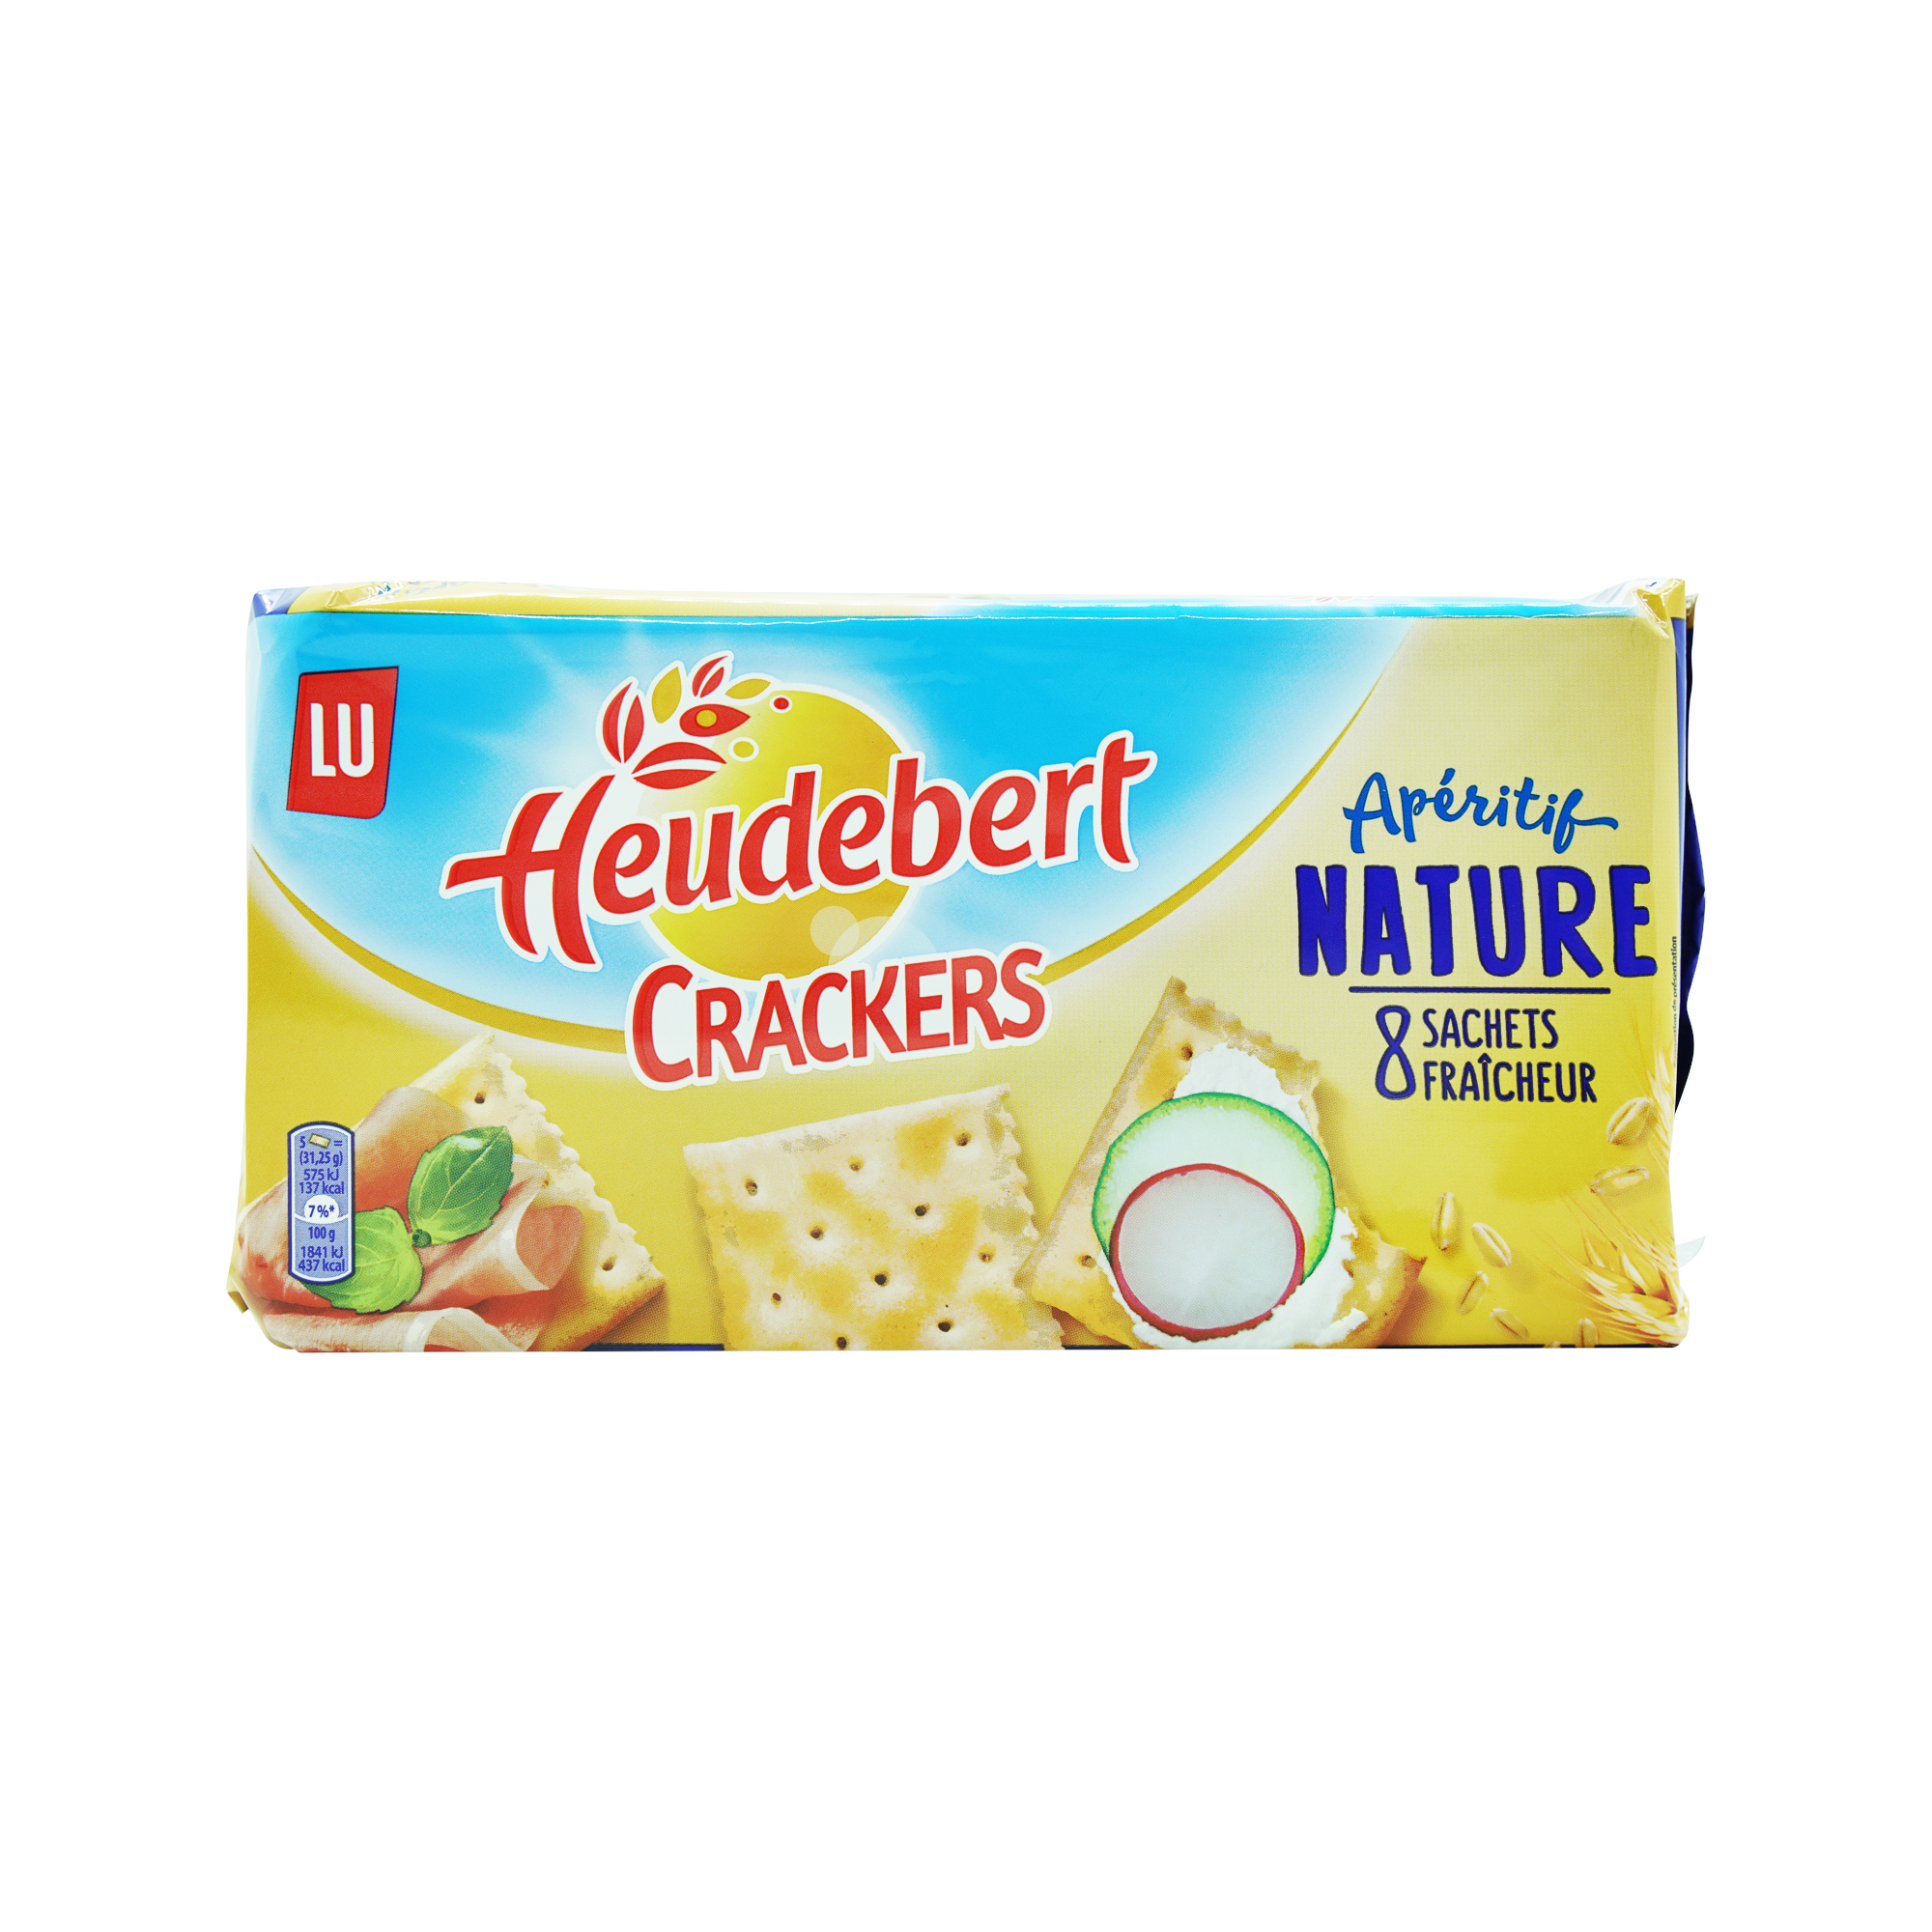 Lu Heudebert Crackers Nature (250g)